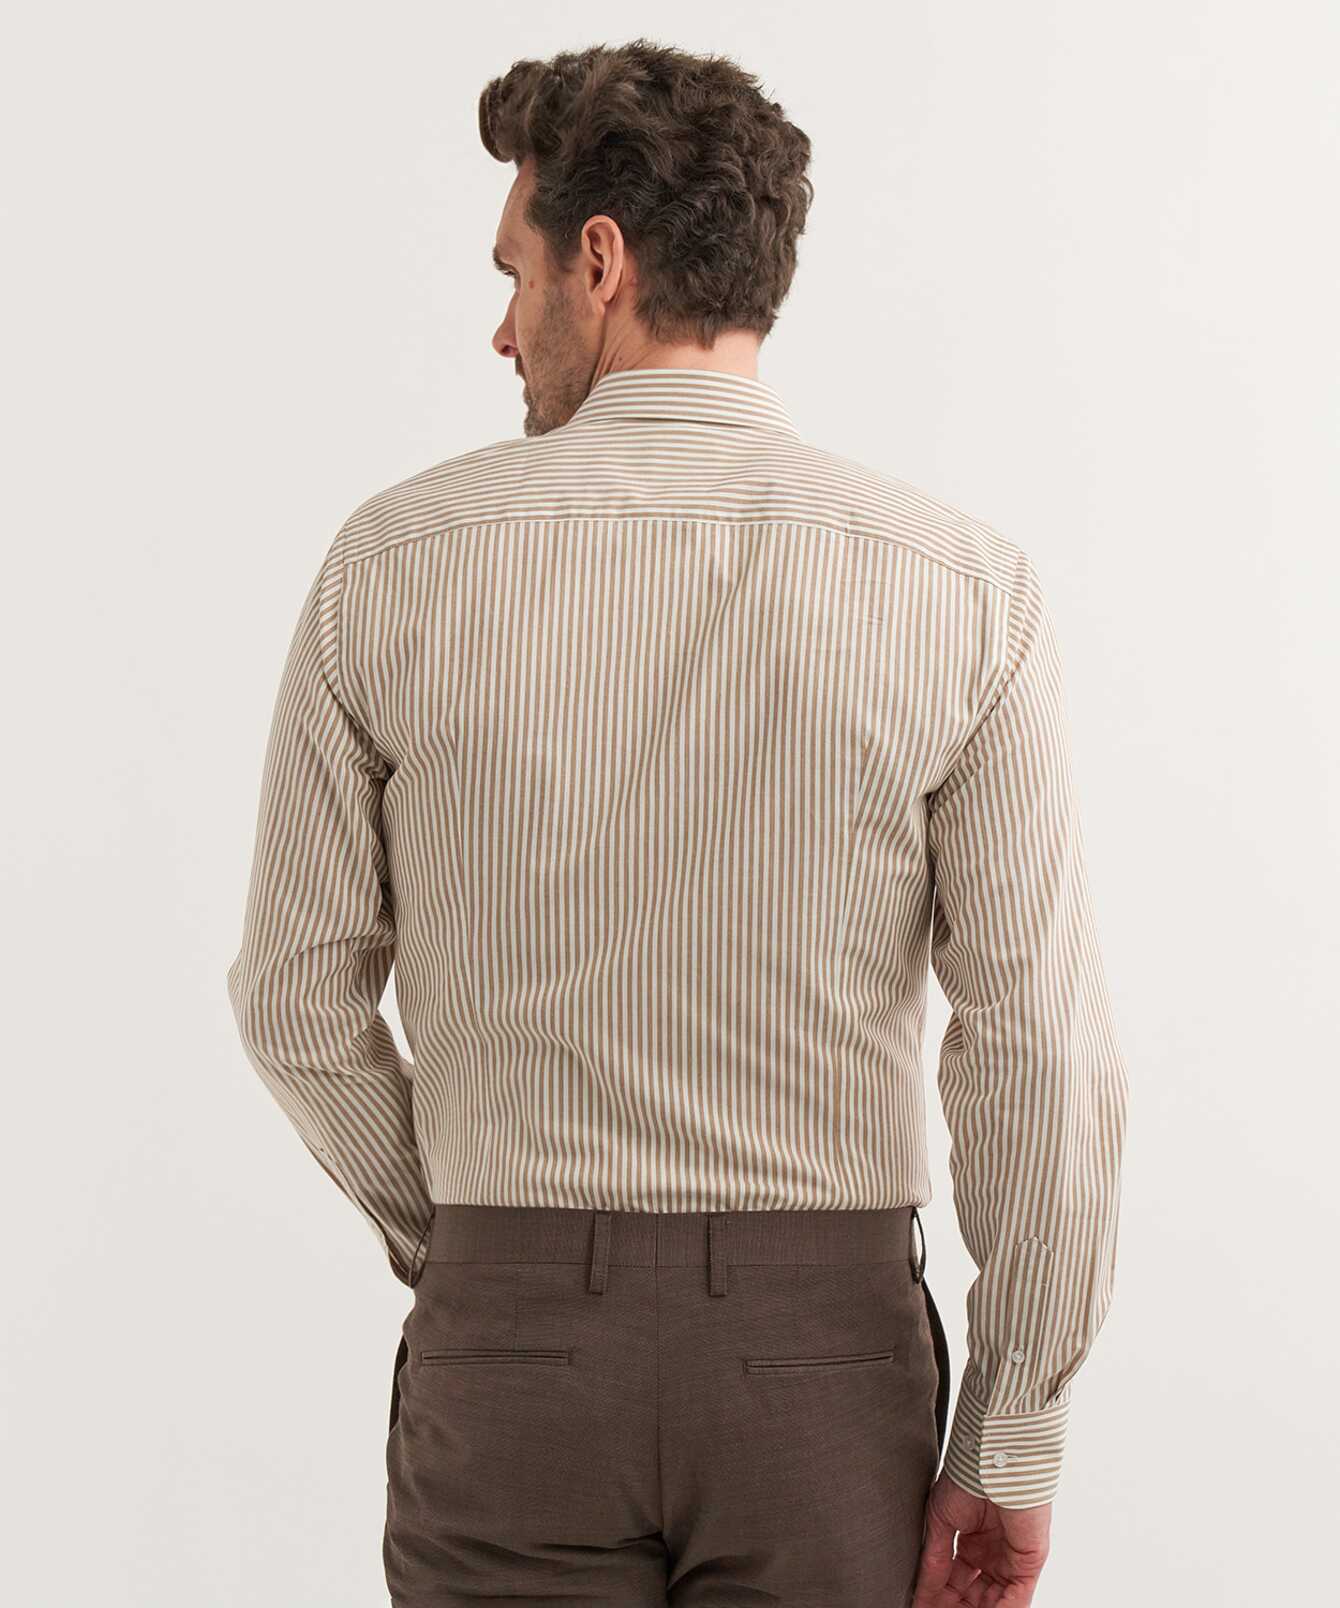 Shirt Montmelo Brown Stripe Shirt Extra Long Sleeve The Shirt Factory